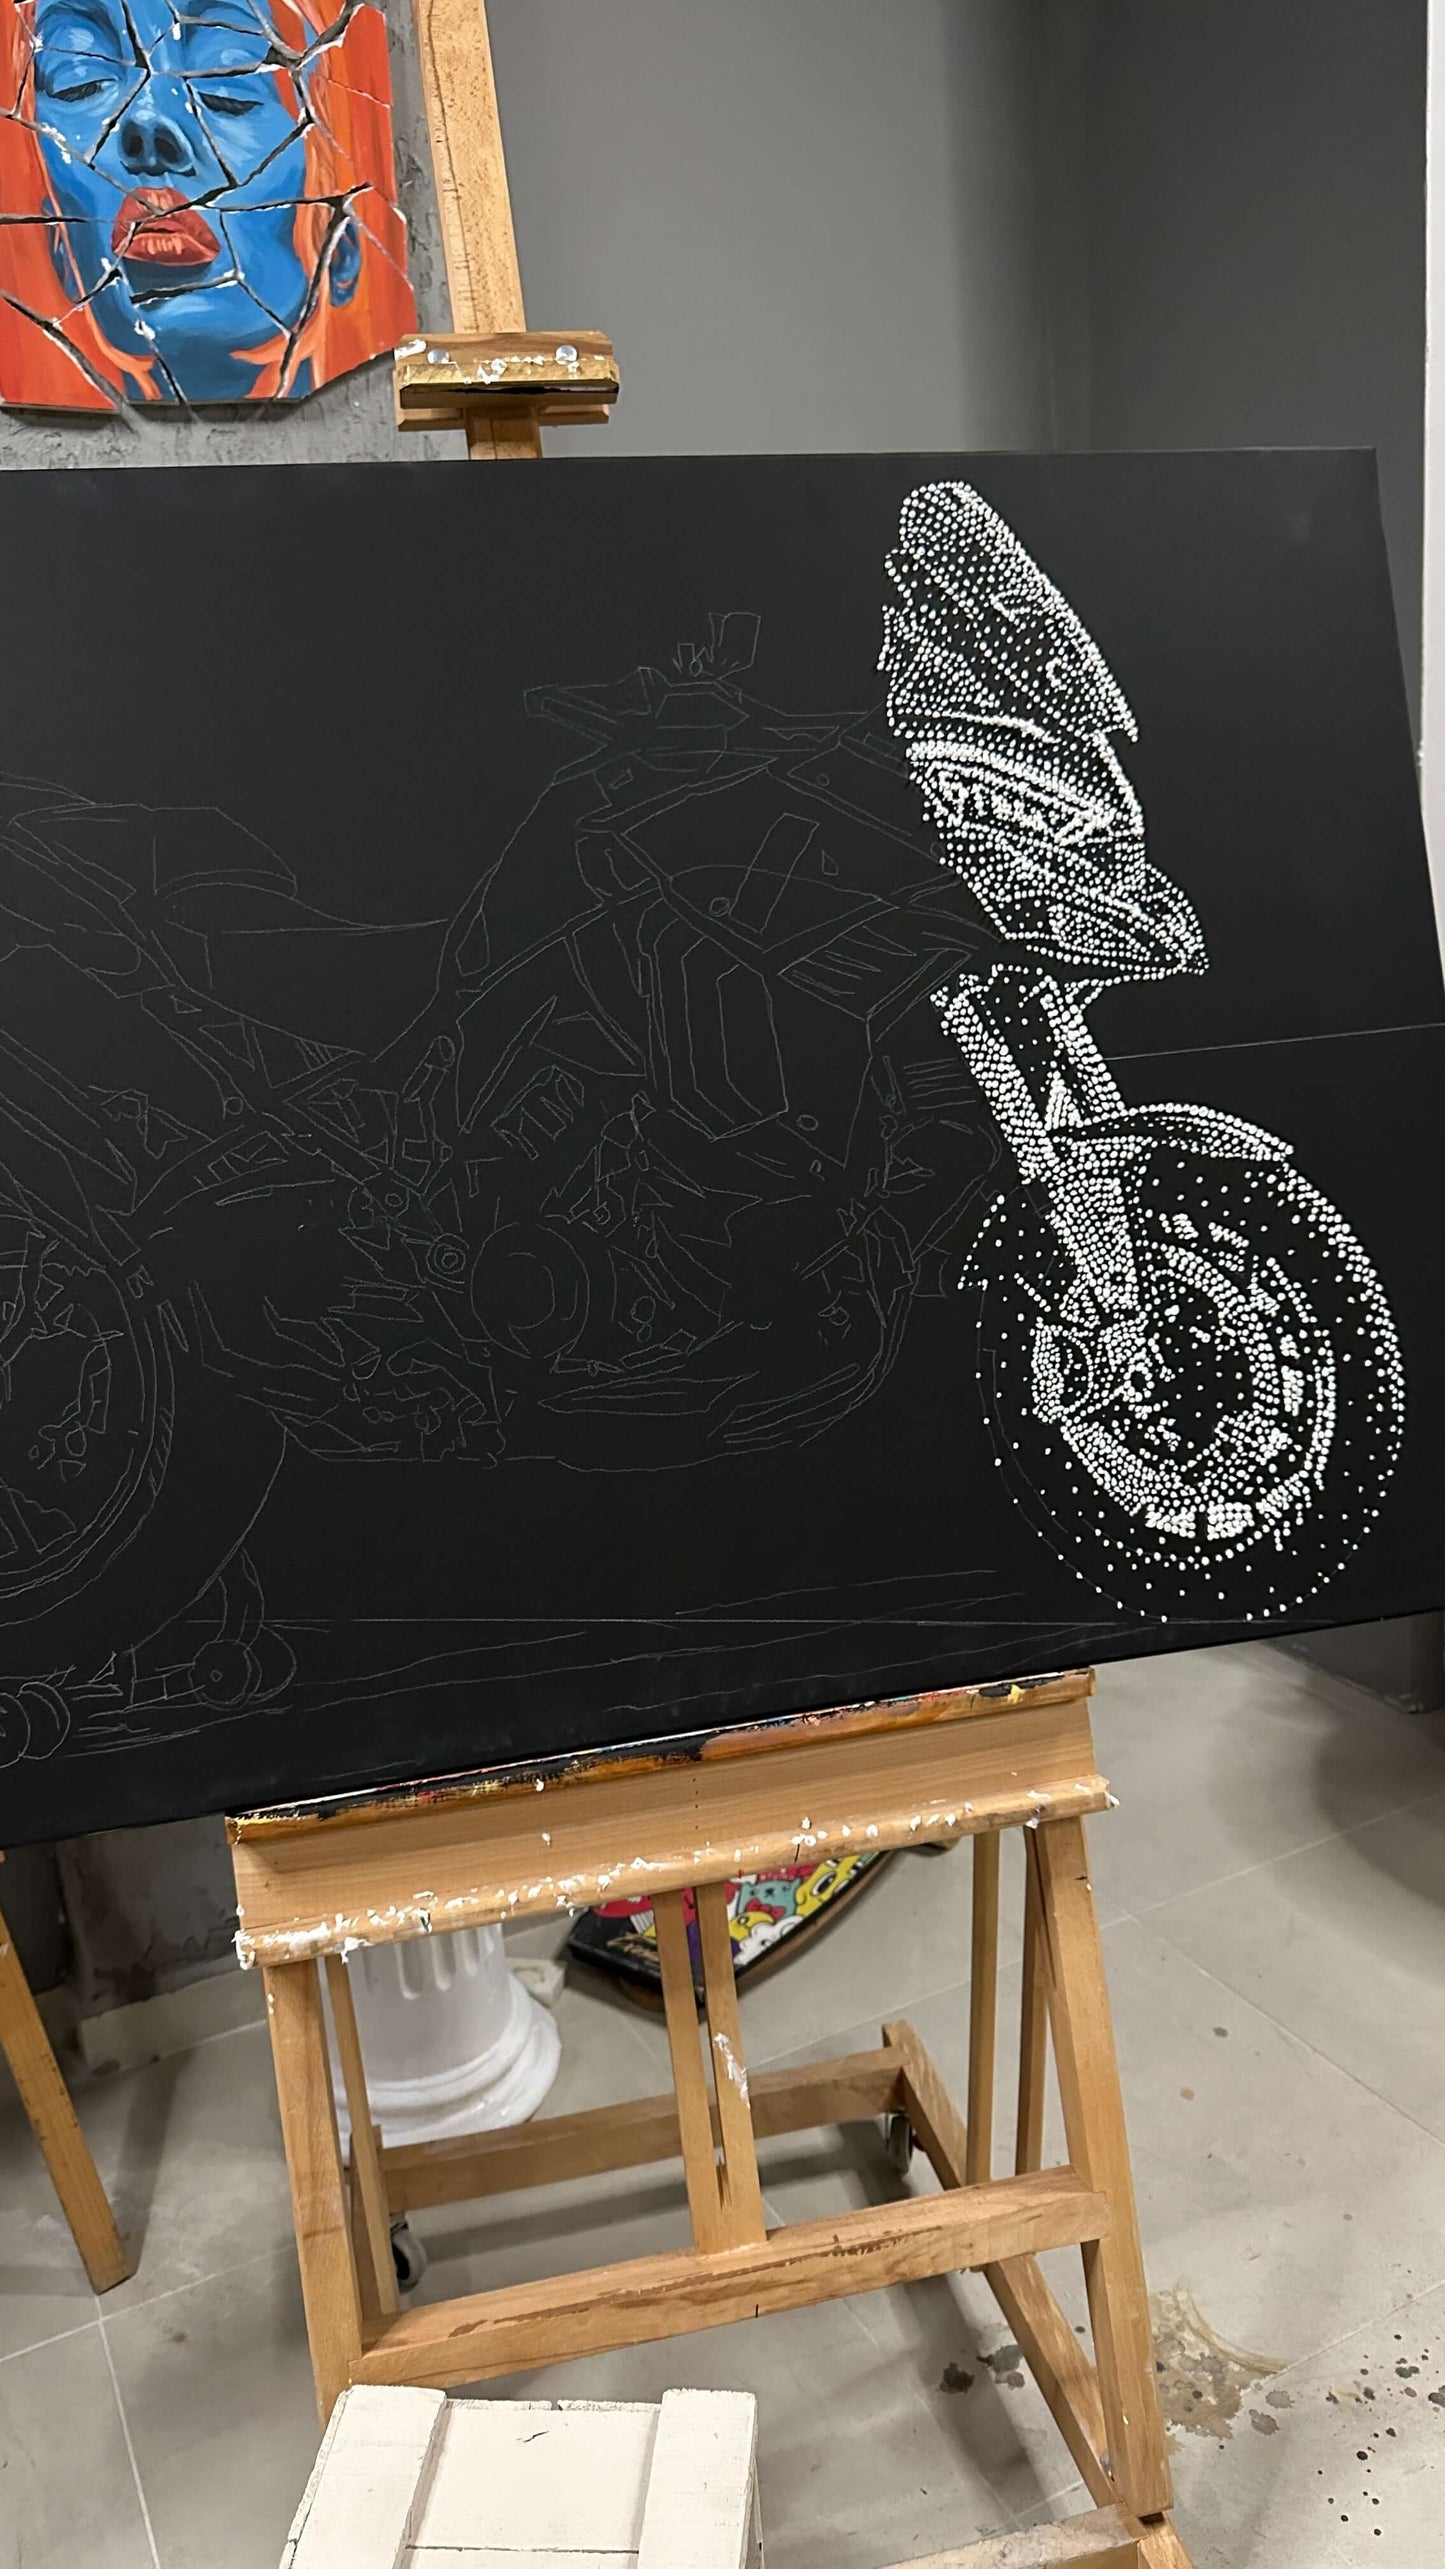 Motorcycle Artwork, Pointillism Painting, Moto Art Gallery, Acrylic Motorcycle Design, Canvas Art for Bikers, Urban Motorcycle Art, Pointillism on Canvas, Motorcycle Illustration, Hand-painted Moto Art, Decorative Bike Art